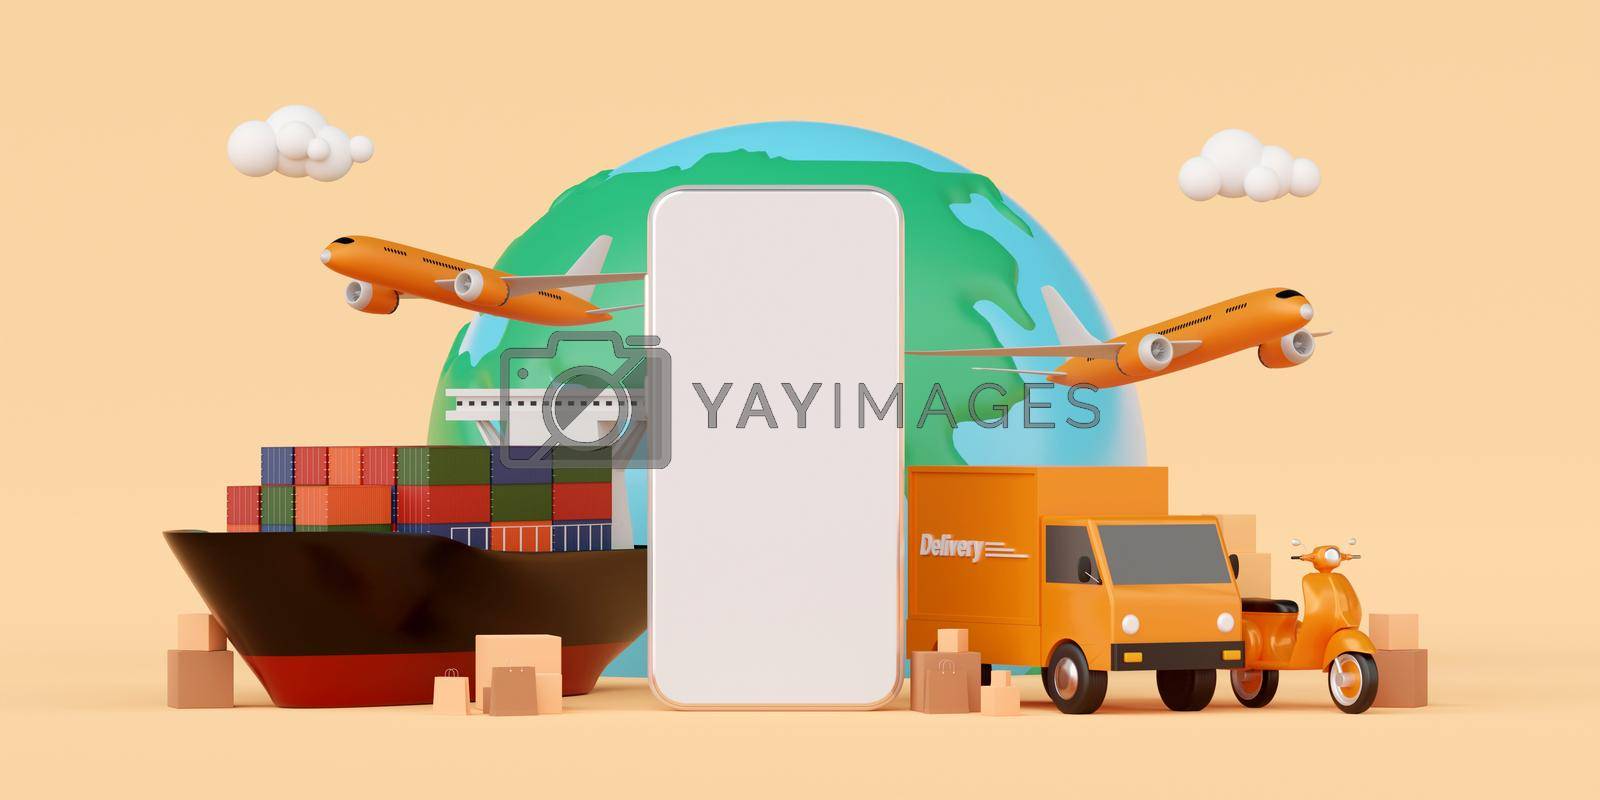 Royalty free image of Global logistics, delivery and cargo transportation via smartphone, 3d illustration by nutzchotwarut